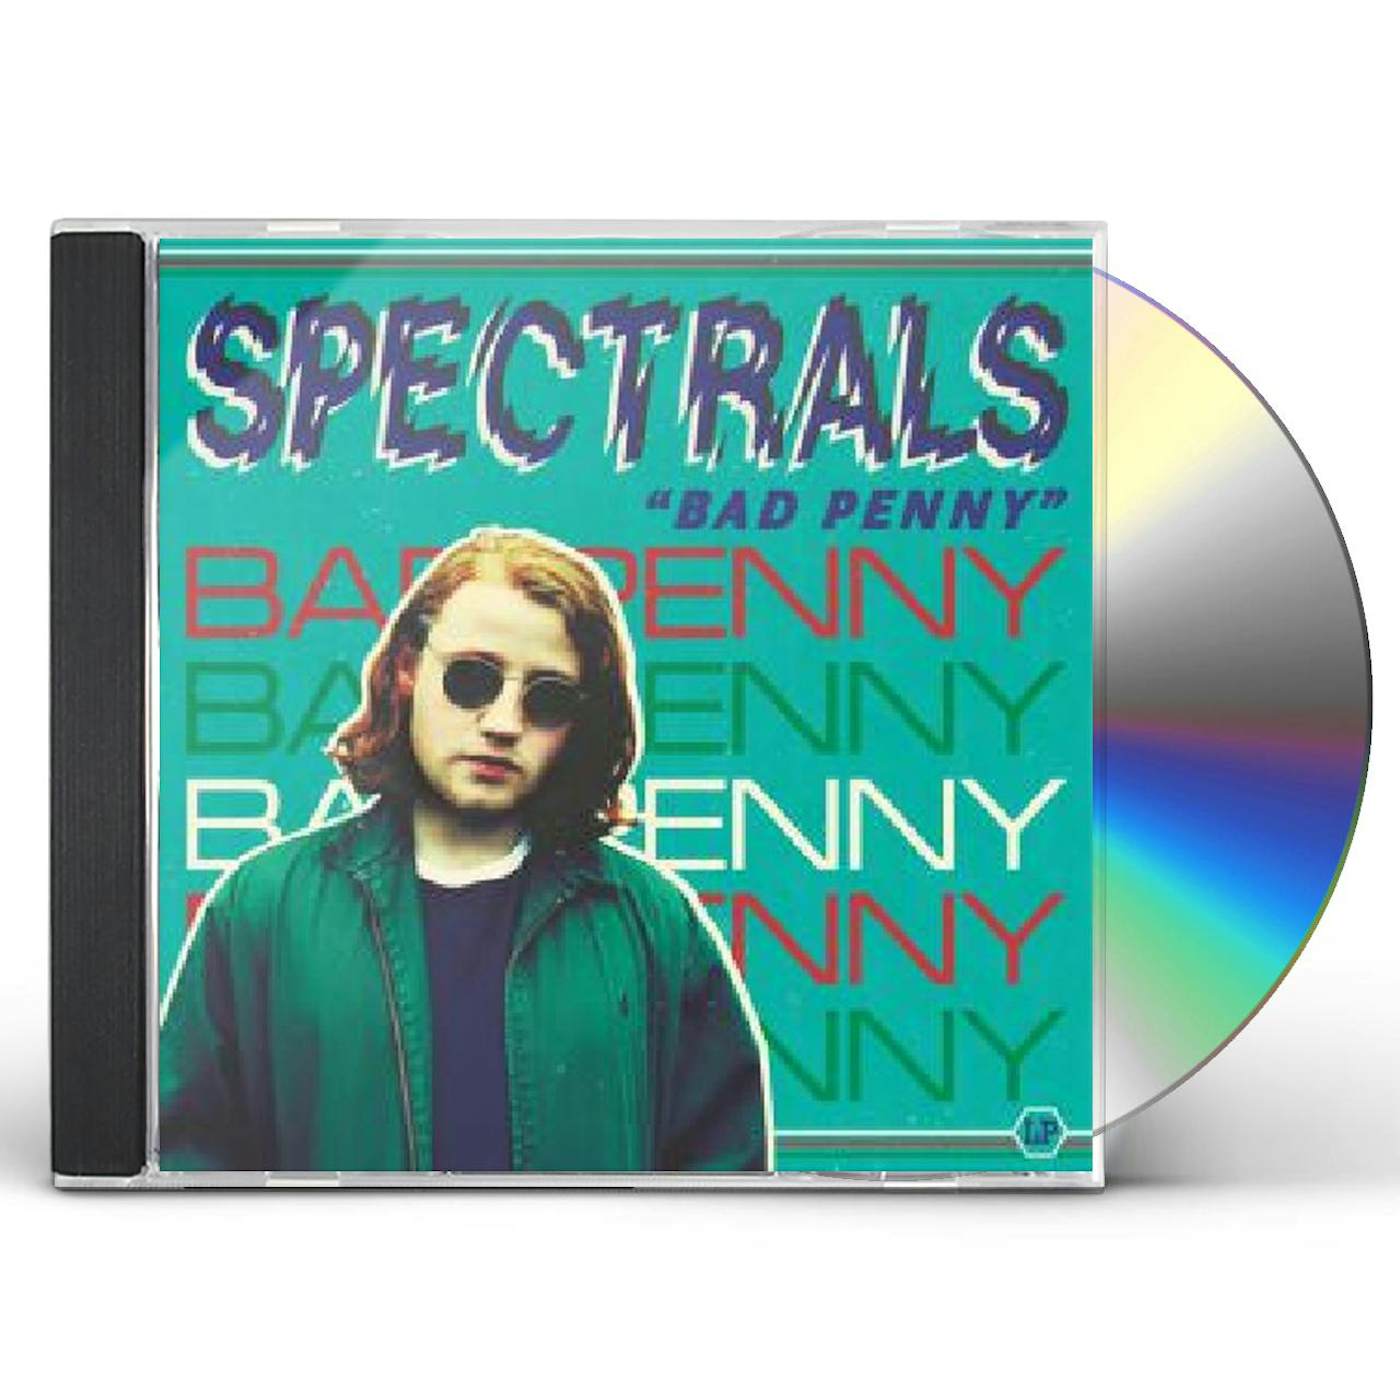 Spectrals BAD PENNY CD